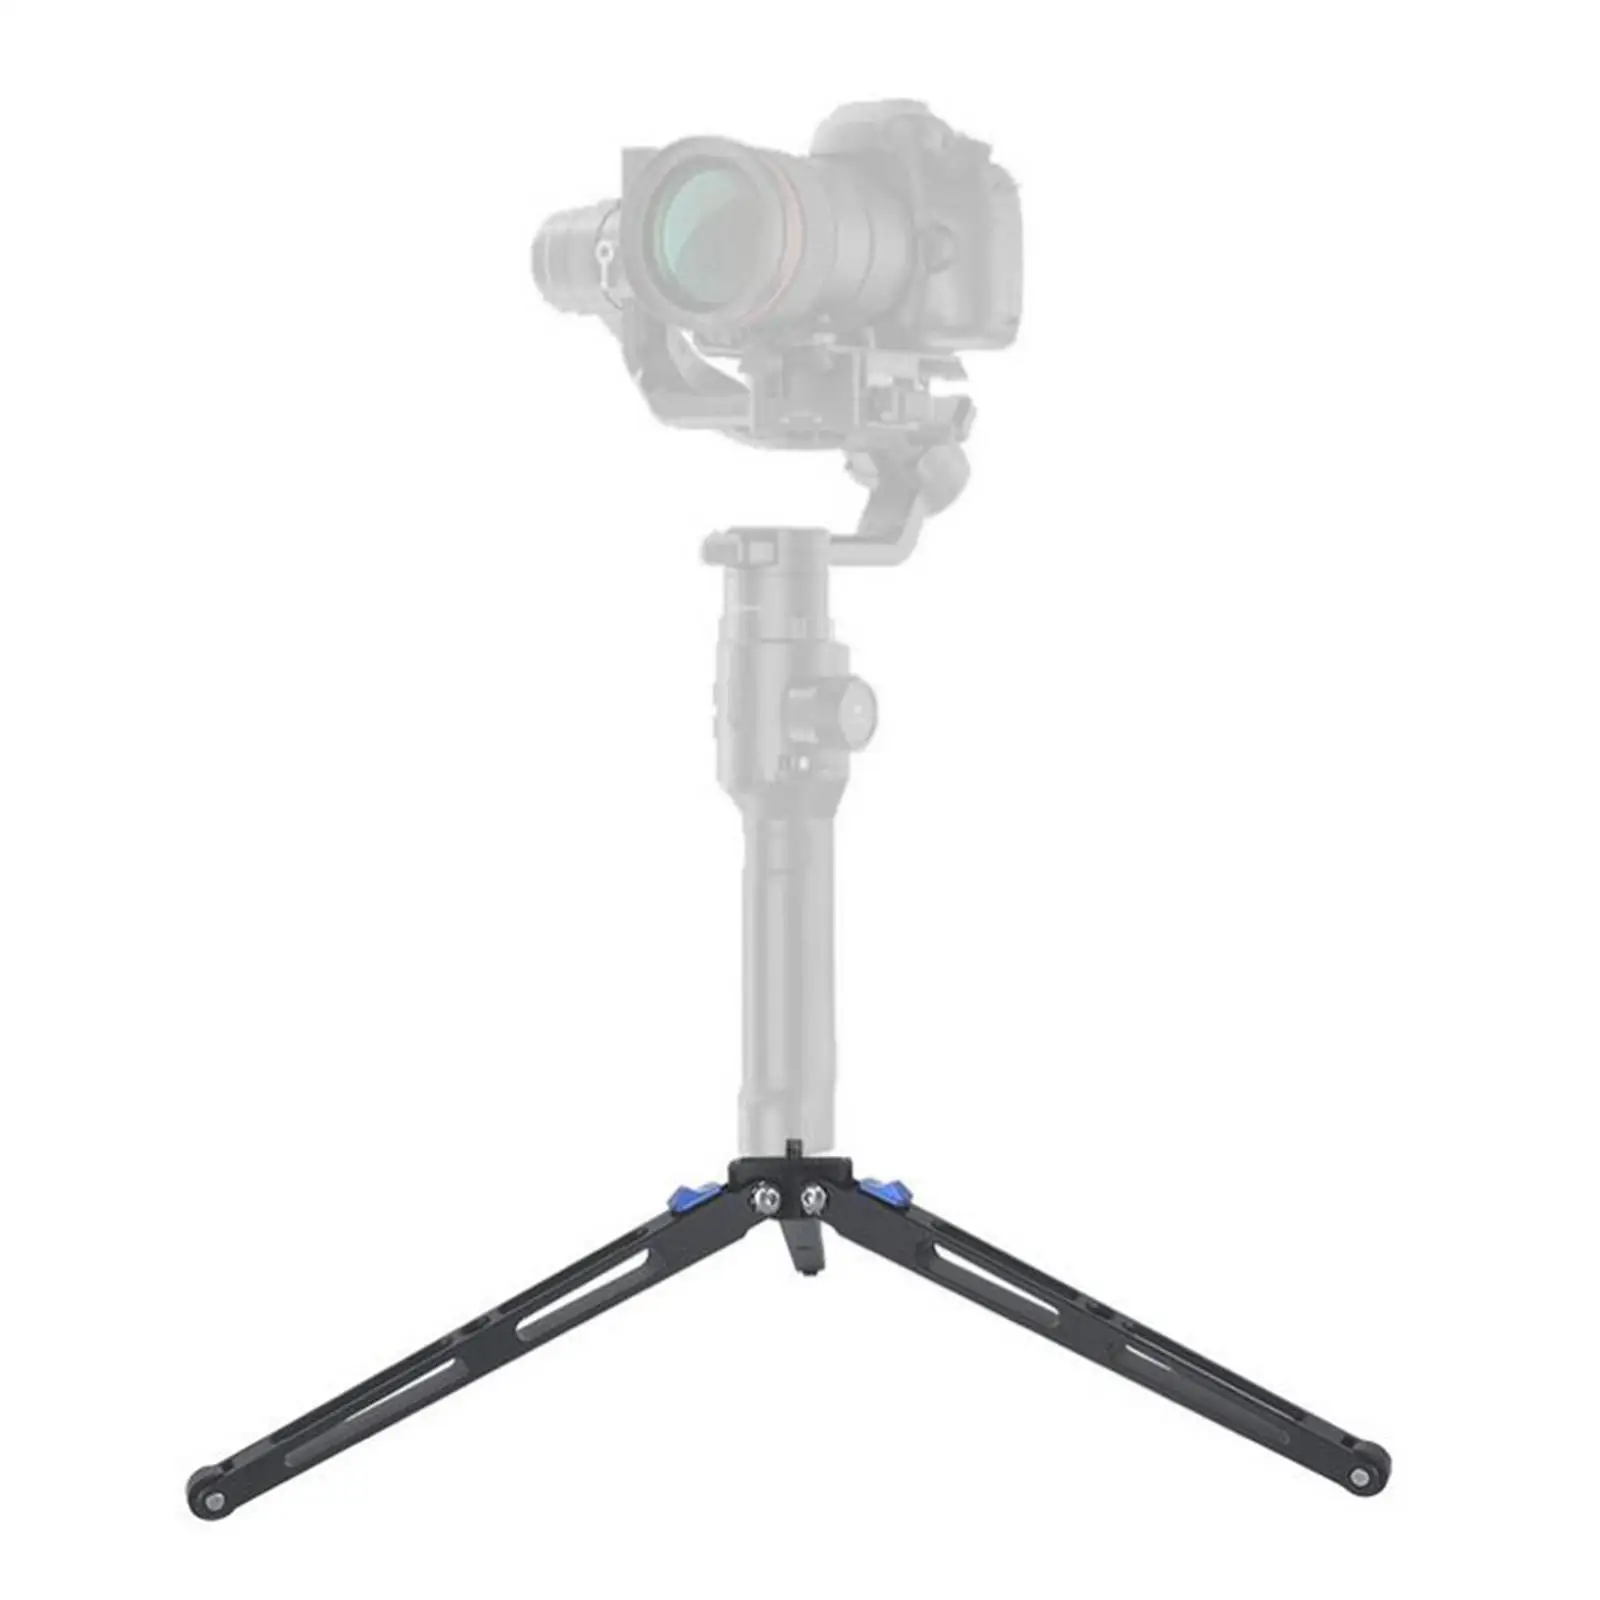 Mini Camera Tripod Portable Flexible Phone Tripod Stand for DSLR Camera Vlogging Photography Video Recording Smartphone